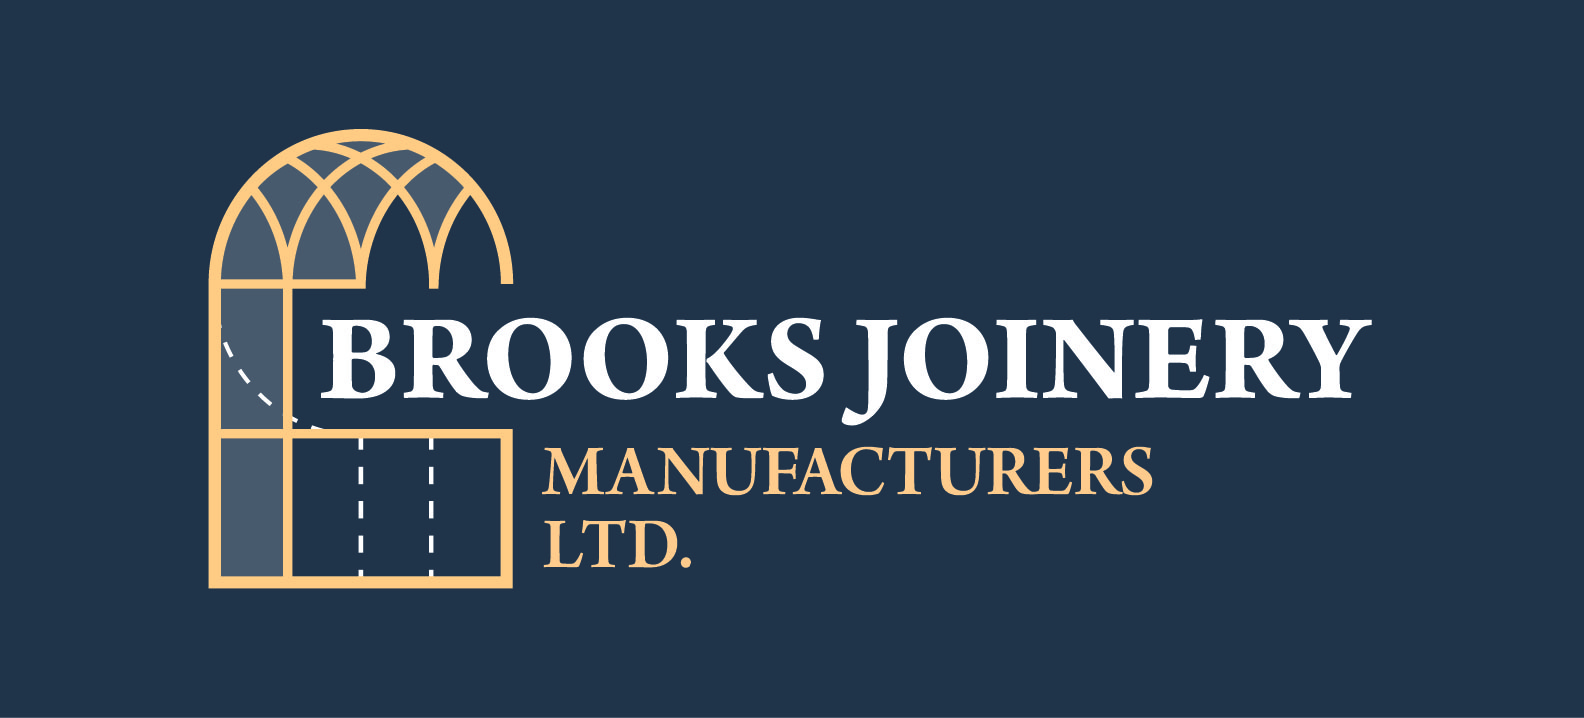 Brooks Joinery Manufacturers Ltd logo